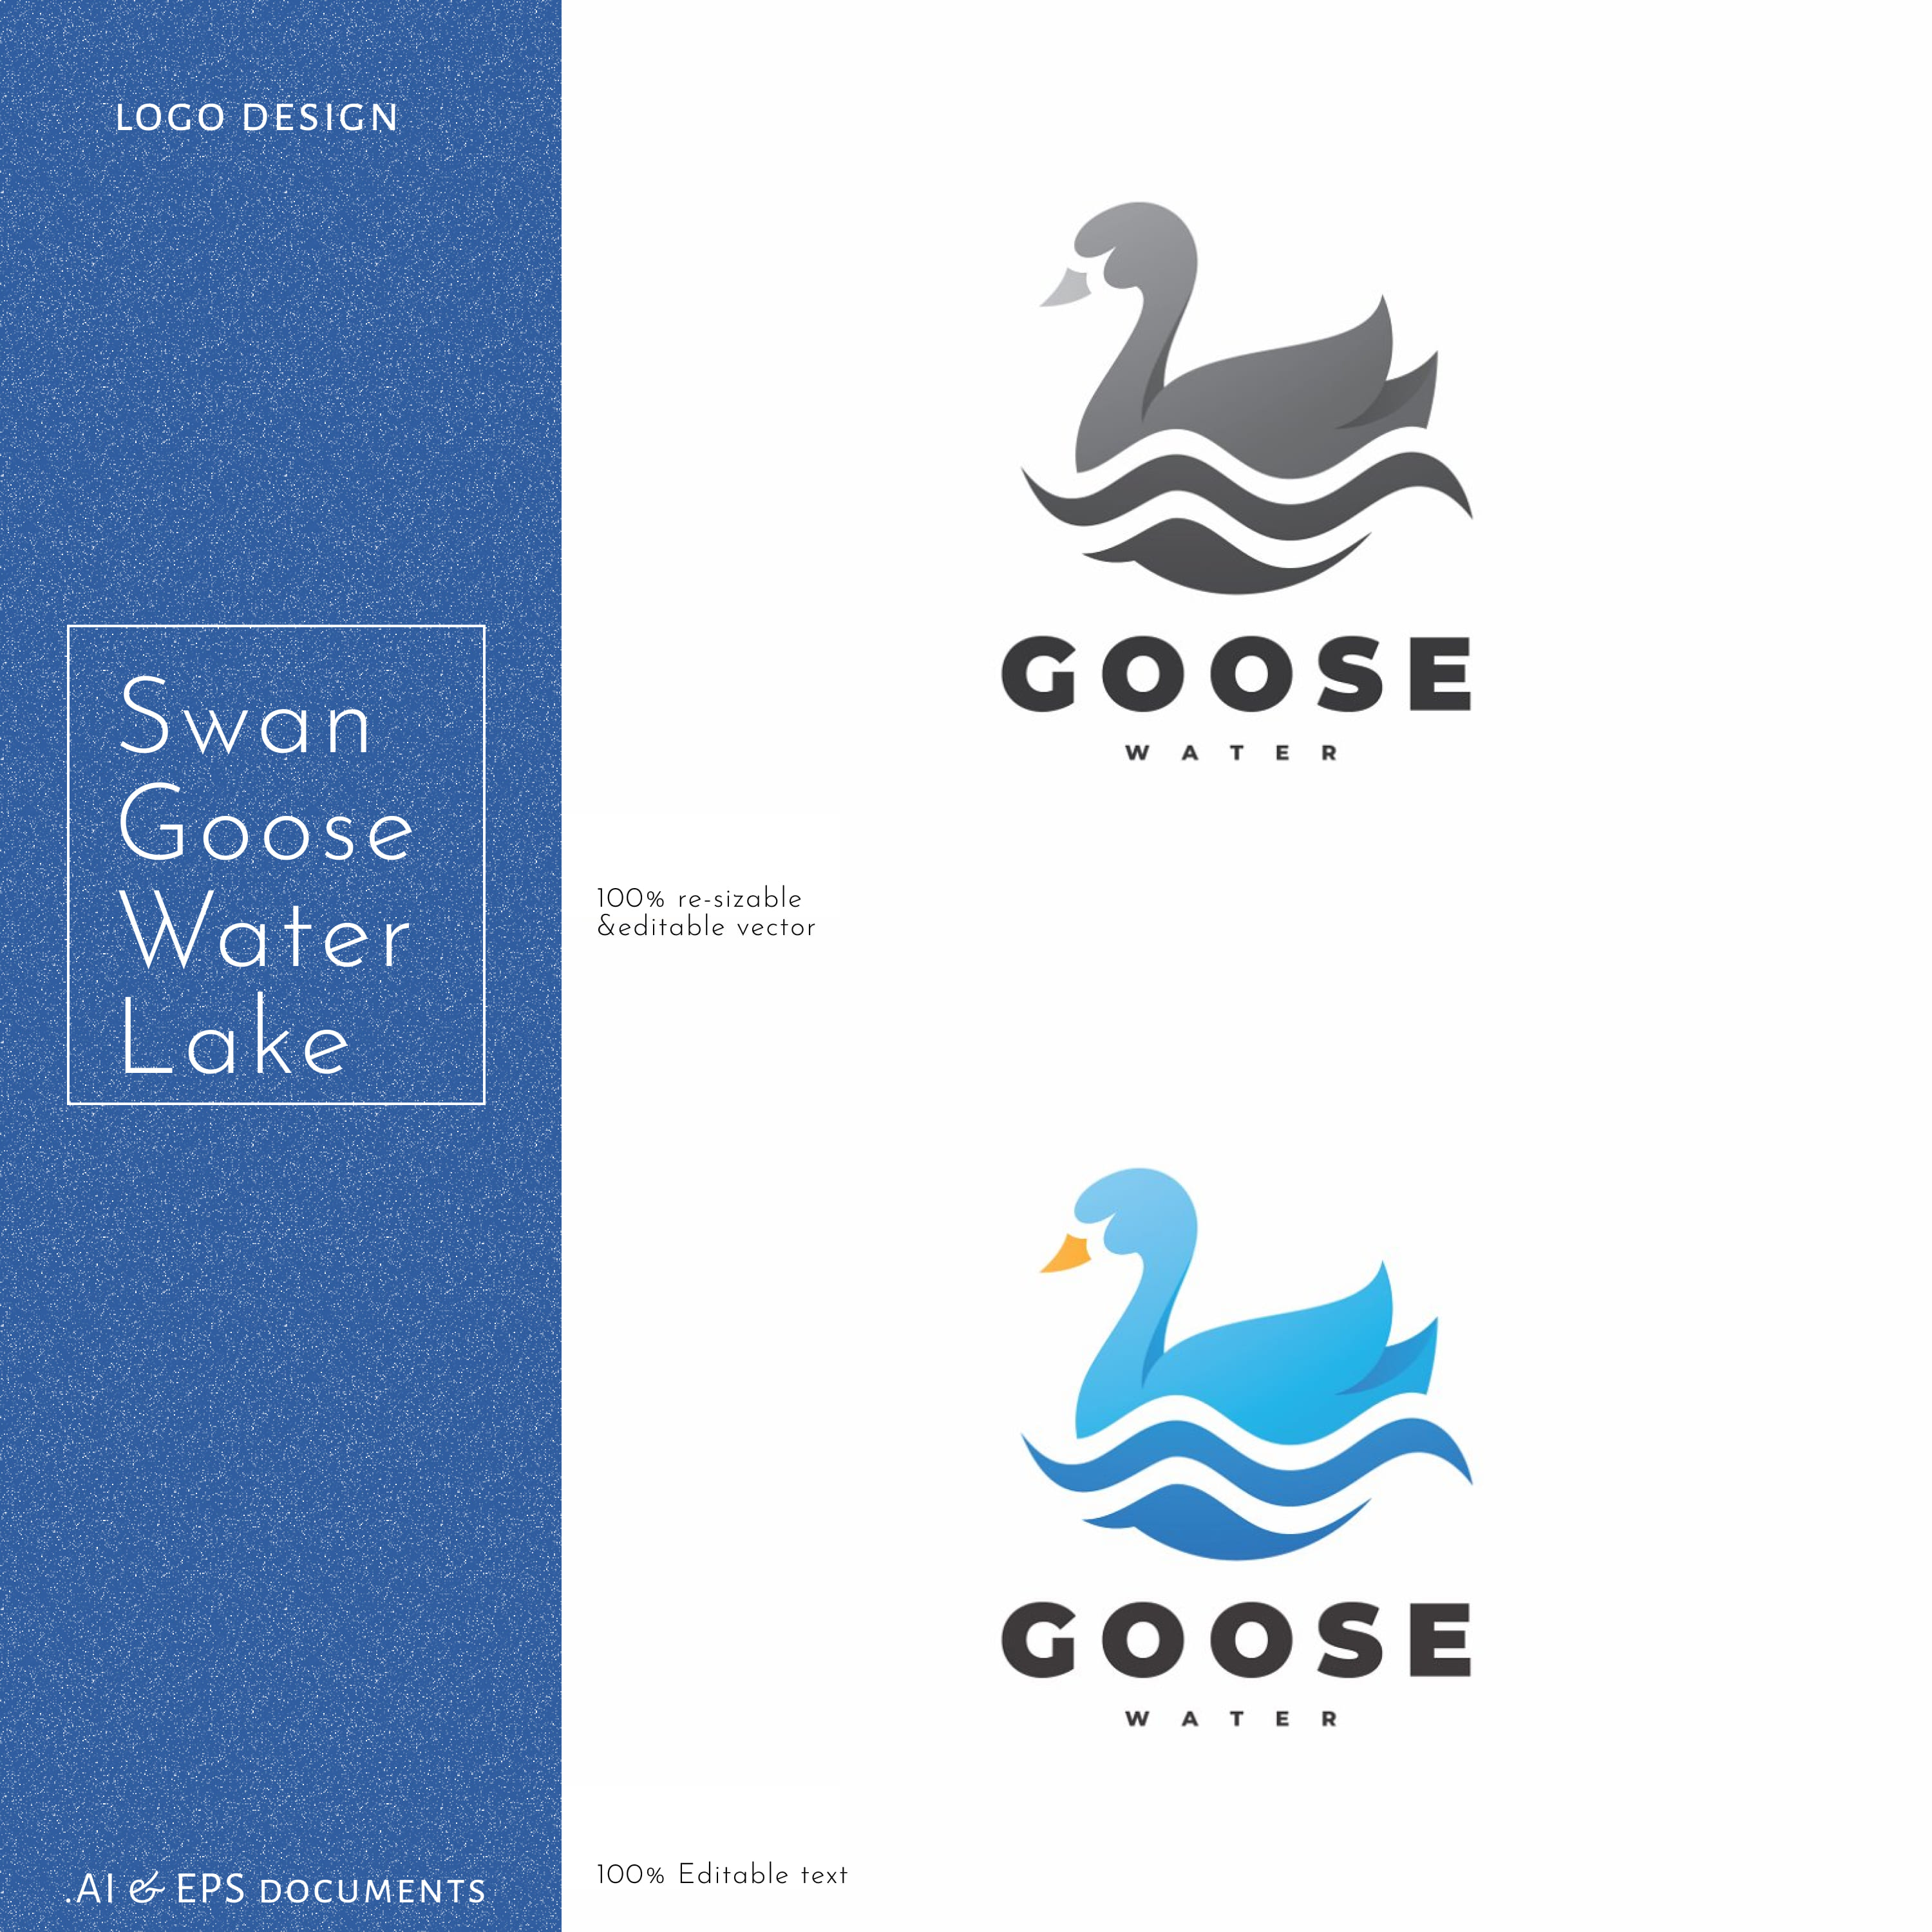 Swan Goose Water Lake Logo Design cover.